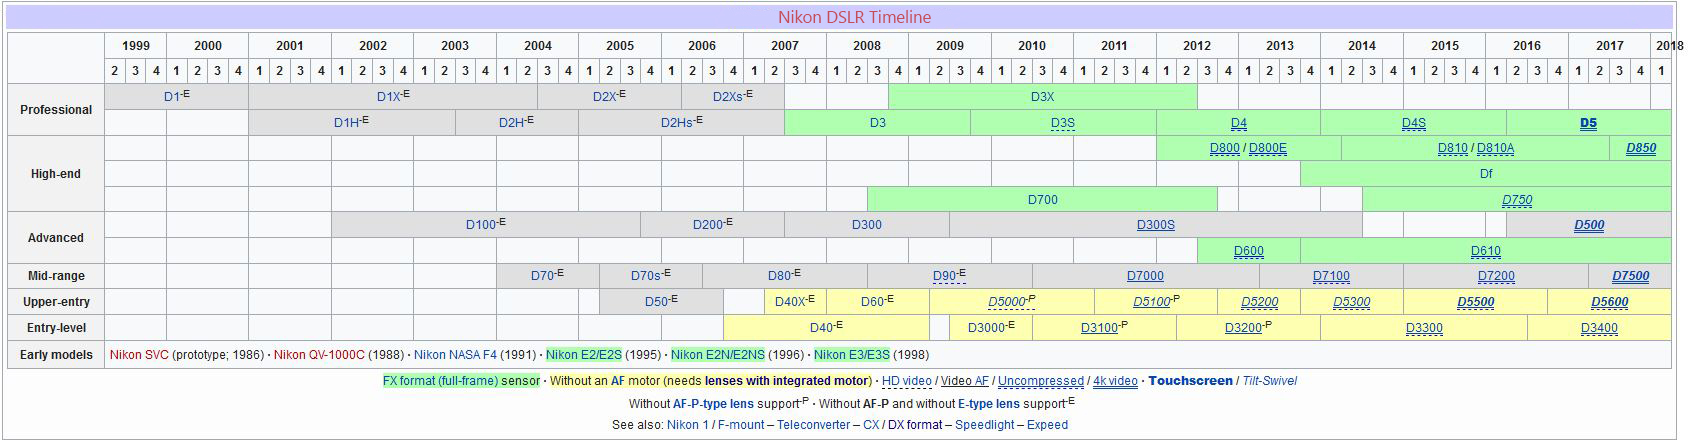 Nikon DSLR Timeline